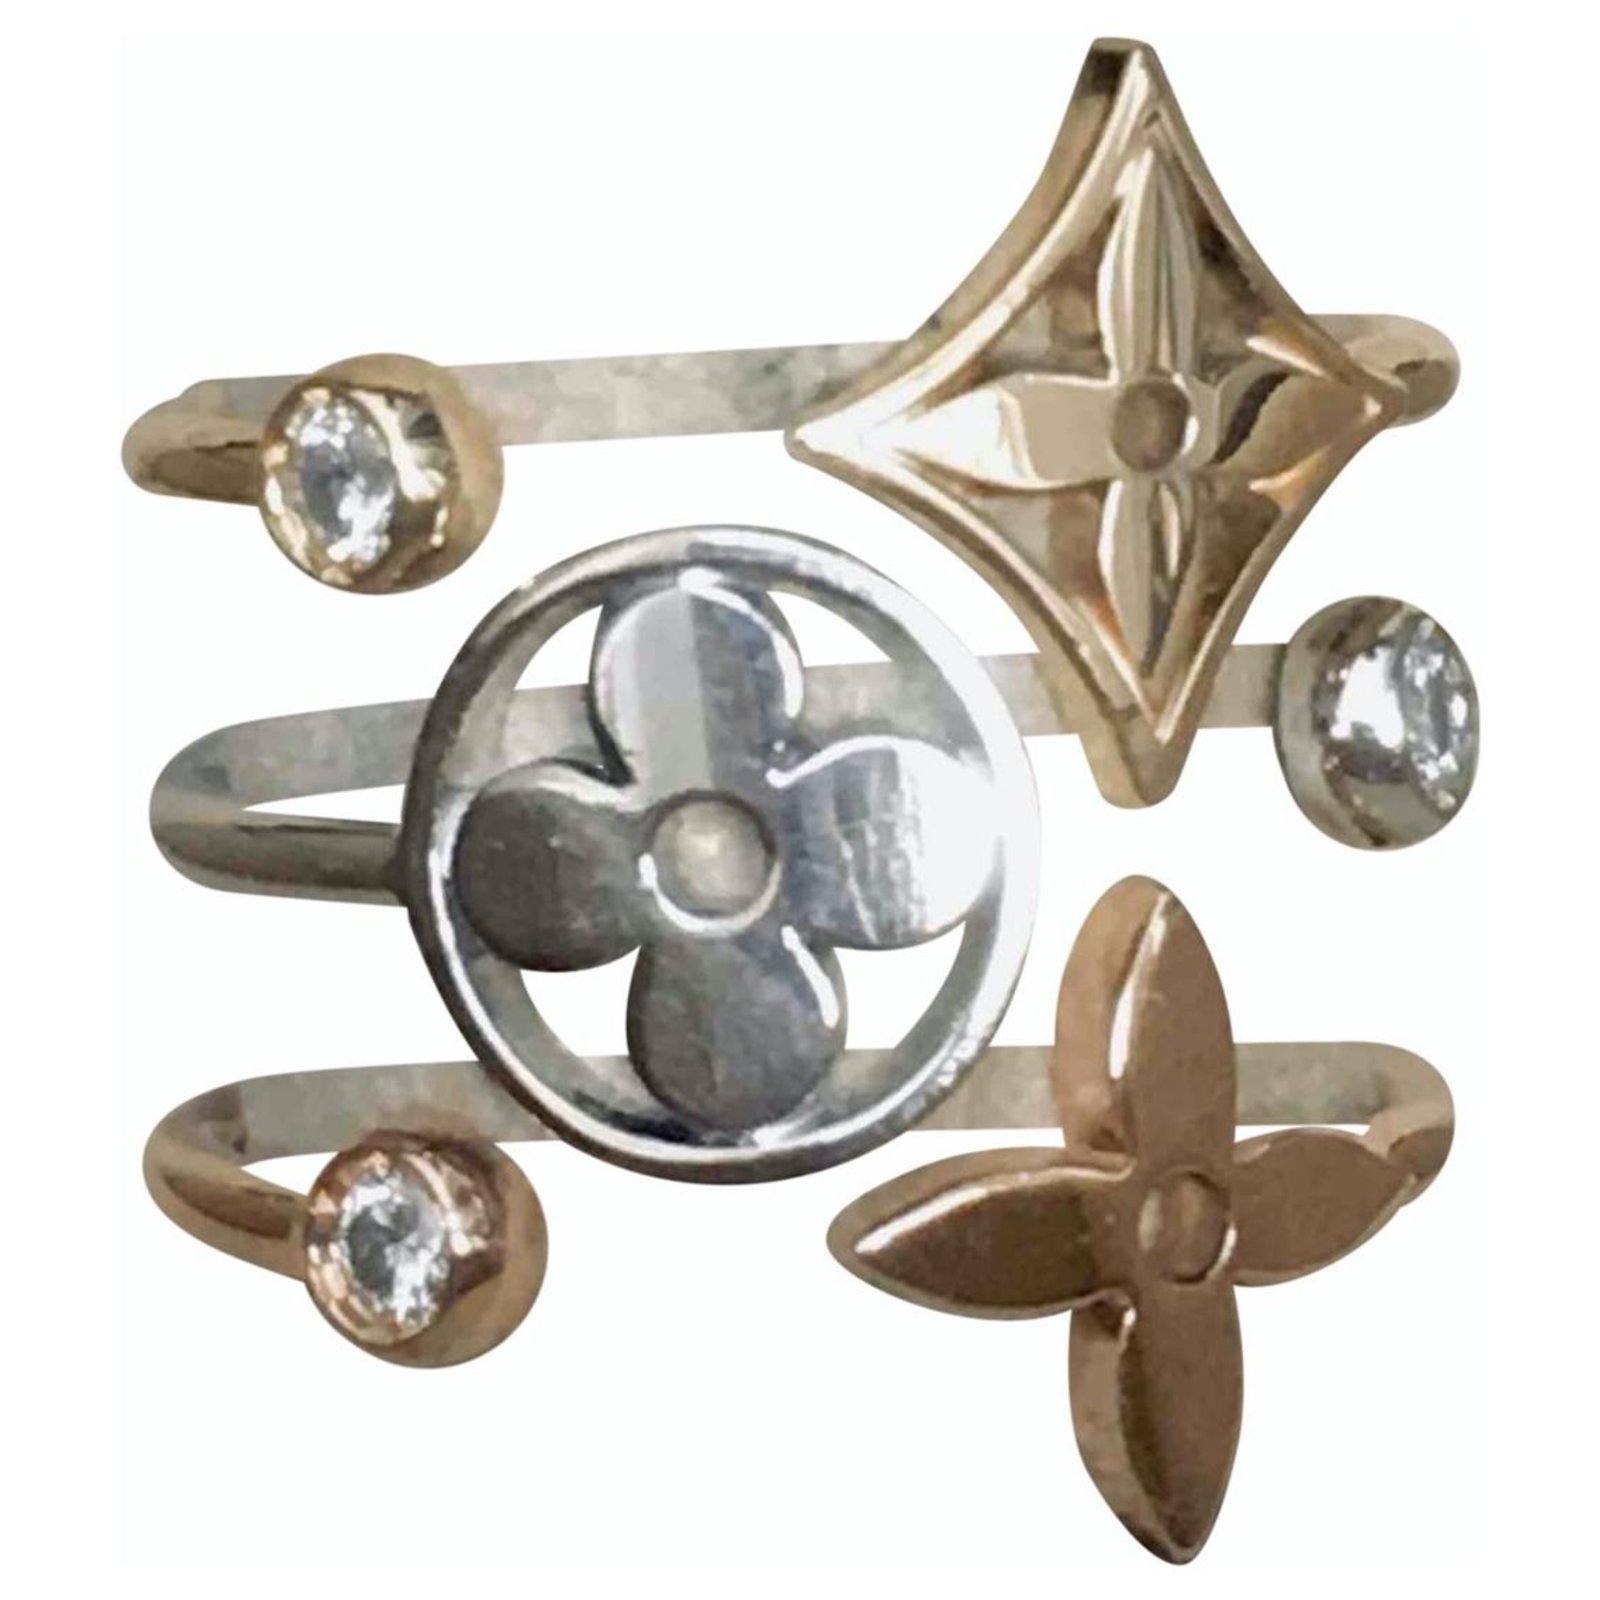 Idylle Blossom Ring, Roségold und Diamanten - Kategorien Q9L25A